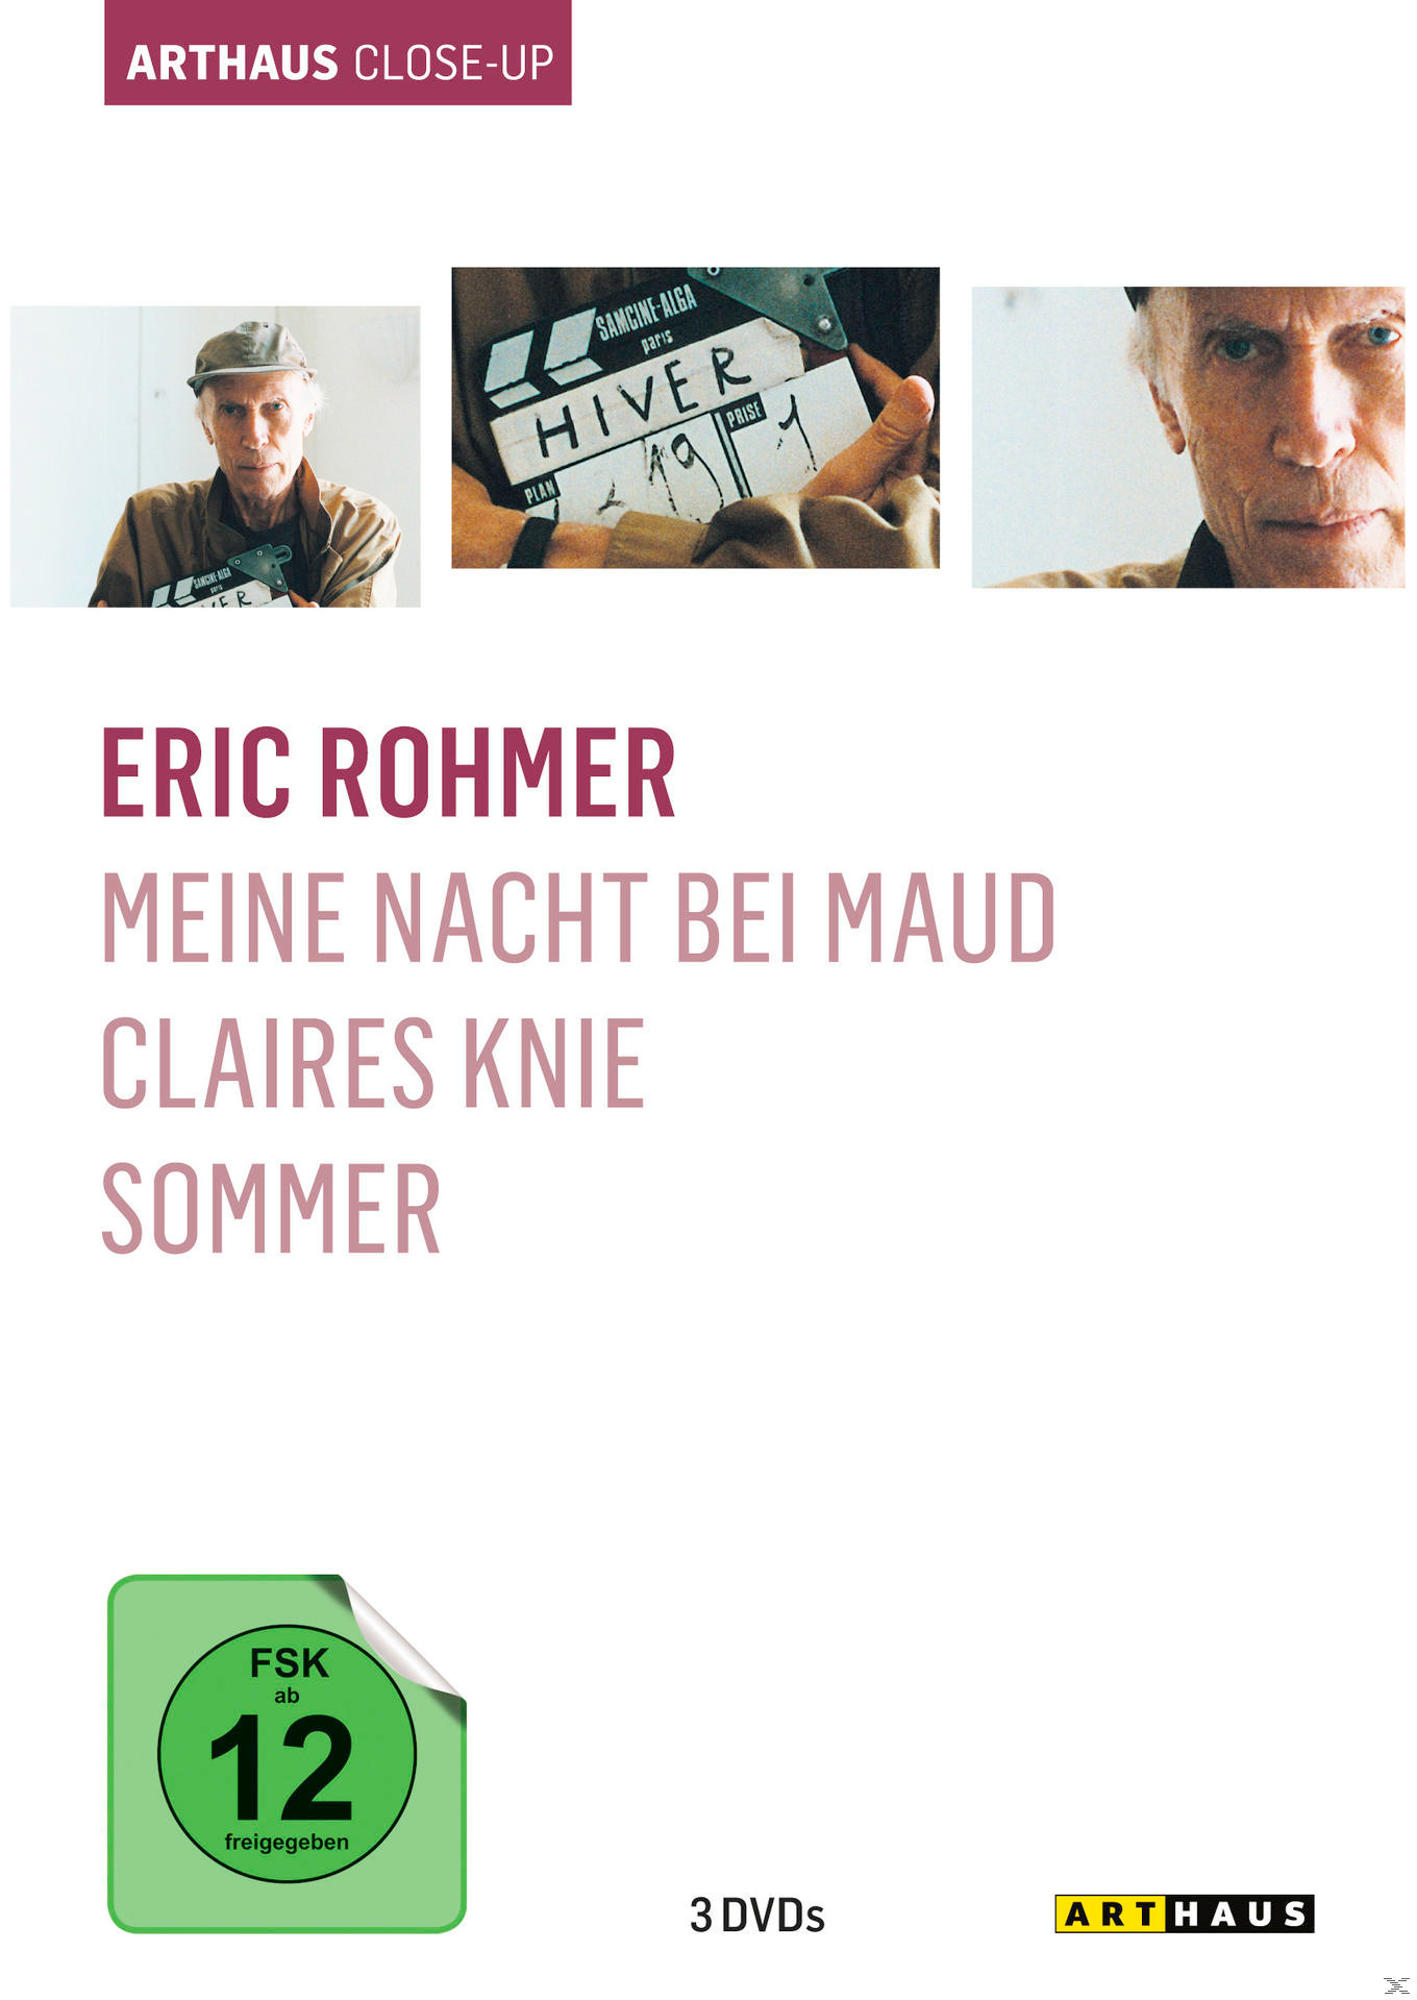 DVD Rohmer Eric (Arthaus Close-Up)